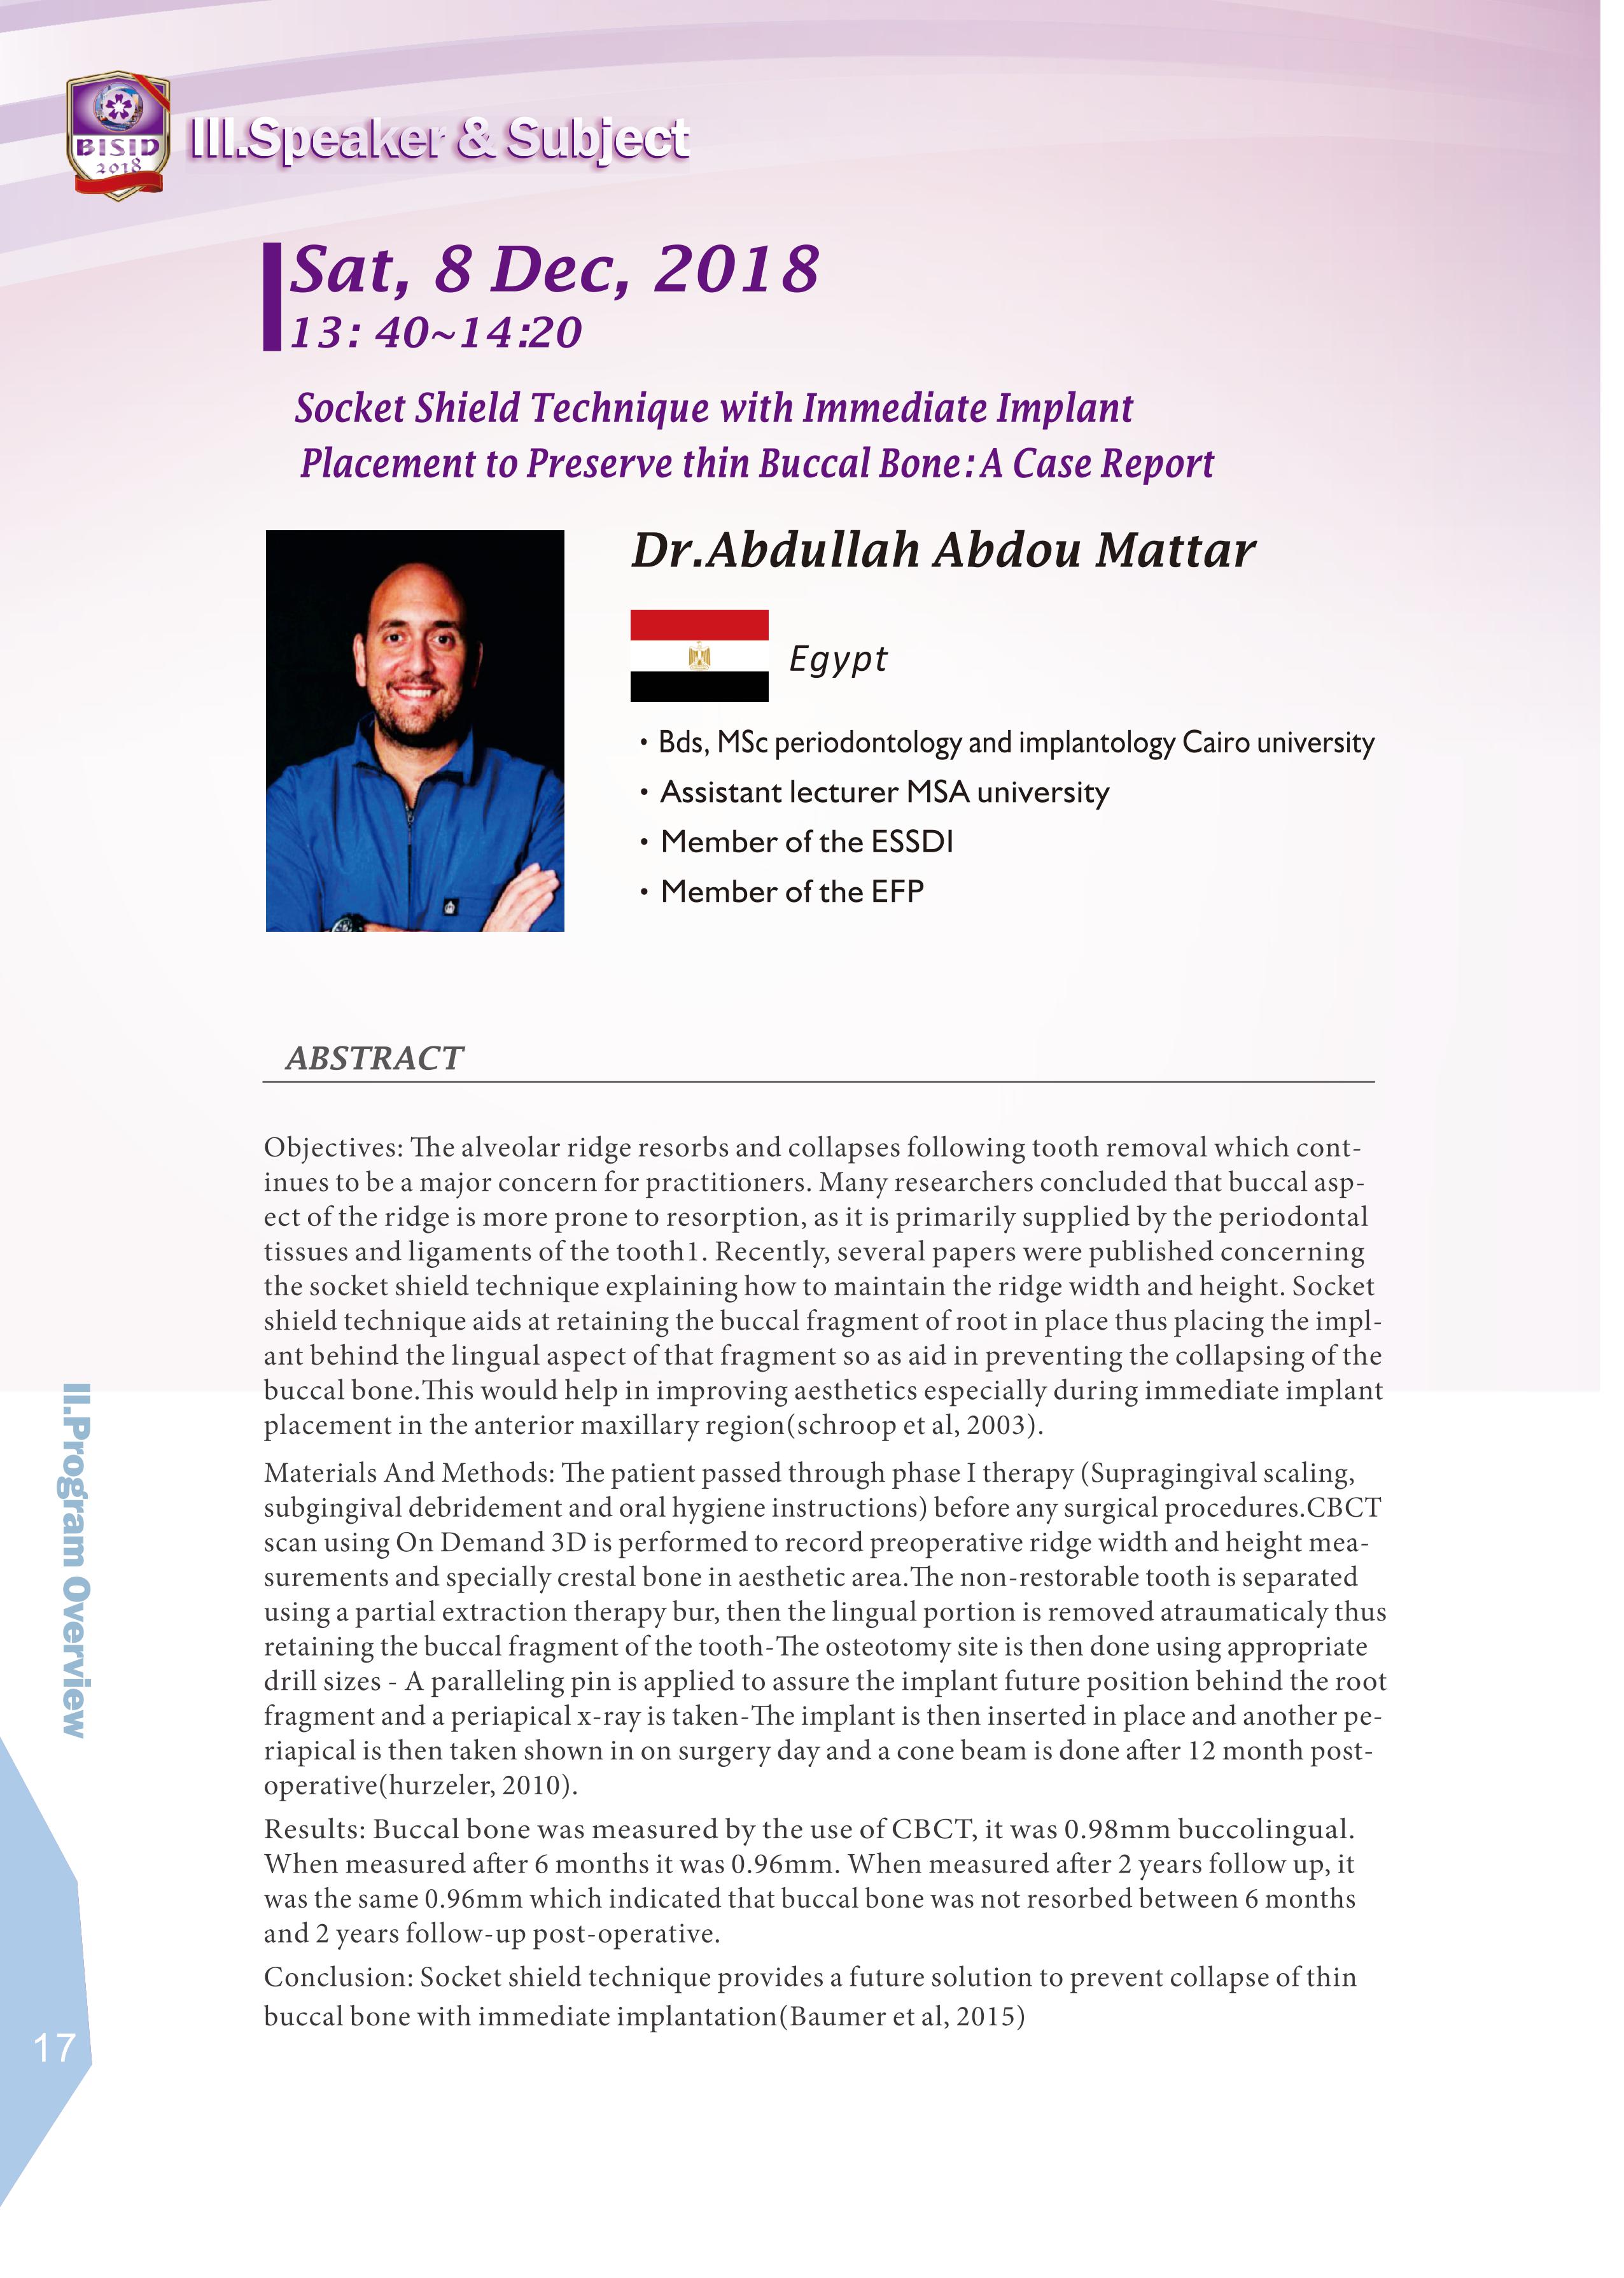 Biomate Internation Symposium of Implant Dentistry-Dr.Abdullah Abdou Mattar